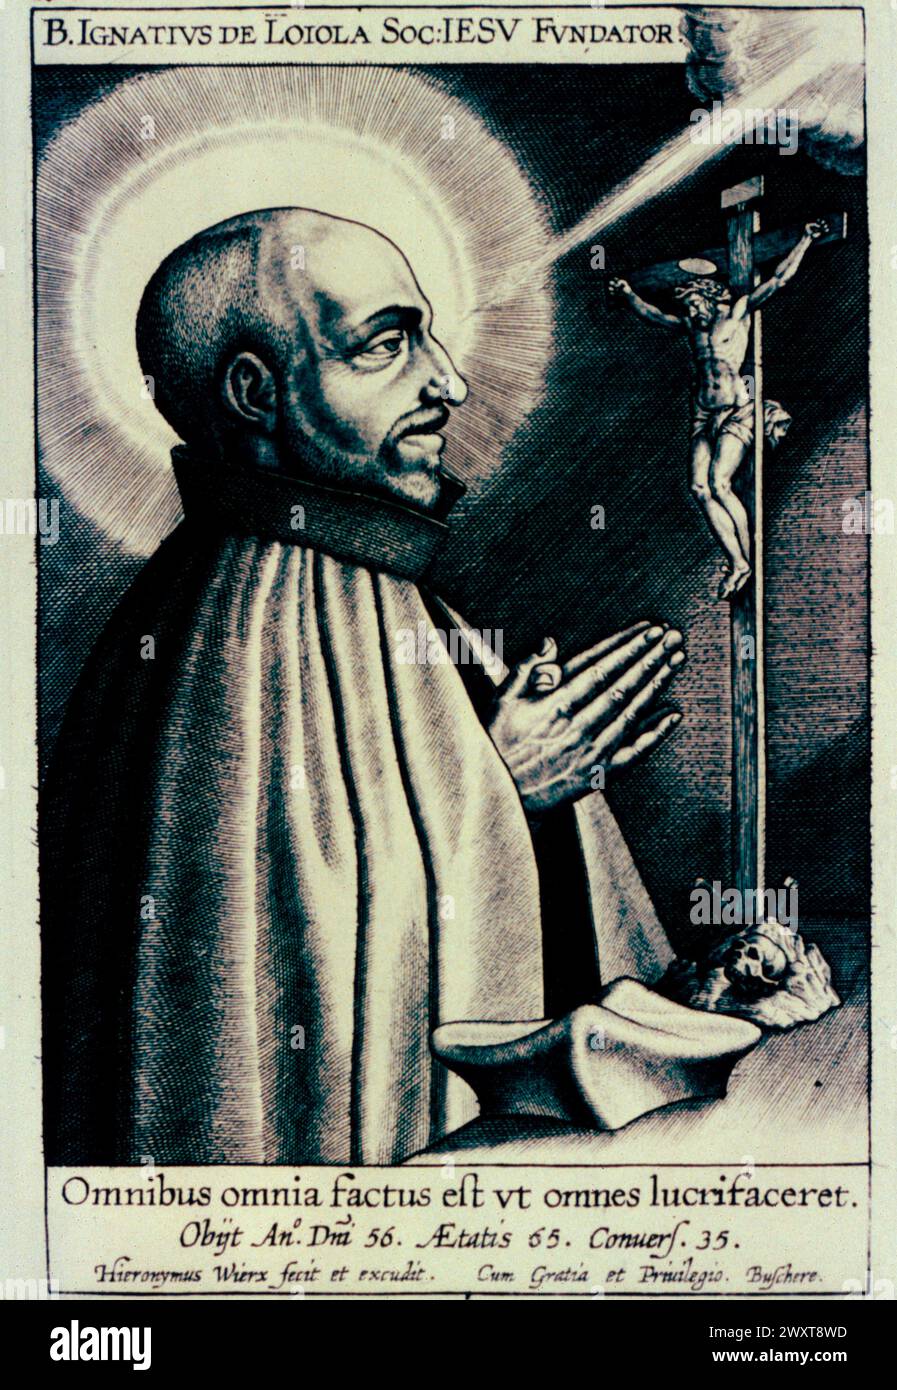 Portrait of Ignatius of Loyola, founder of the Jesuits, illustration, 16th century Stock Photo